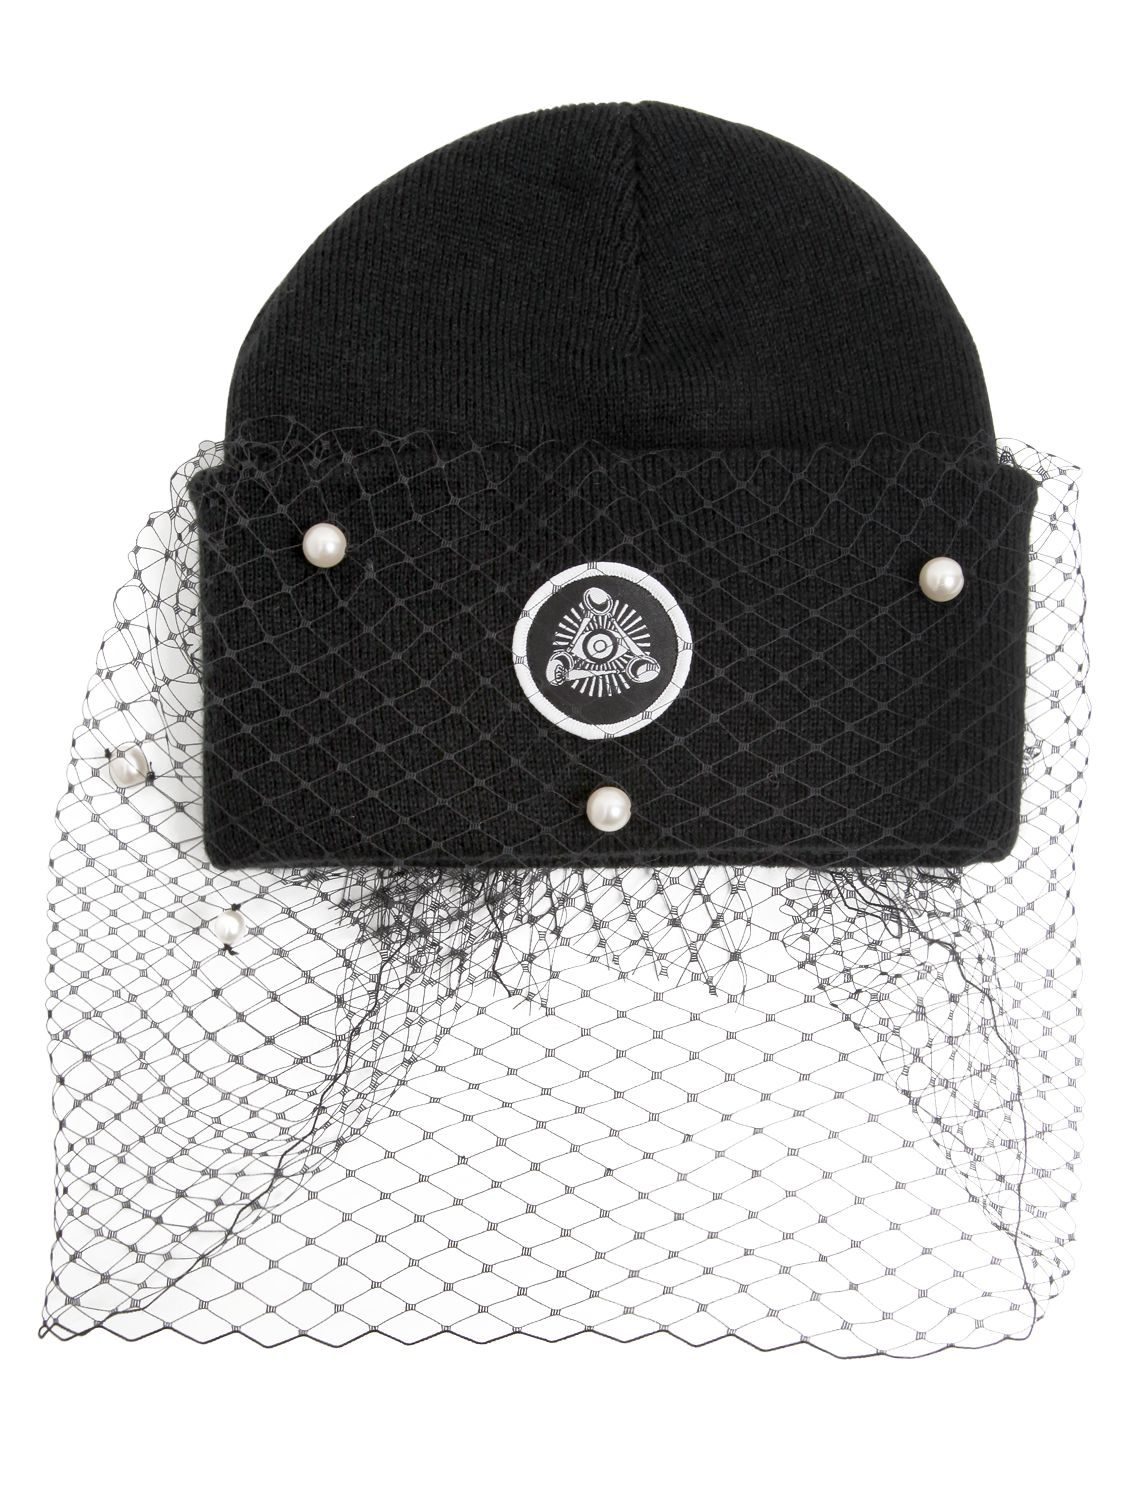 beanie  Bow &  Silver Attire Hat   Beanie veil Spoon Lyst With Veil hat  Black